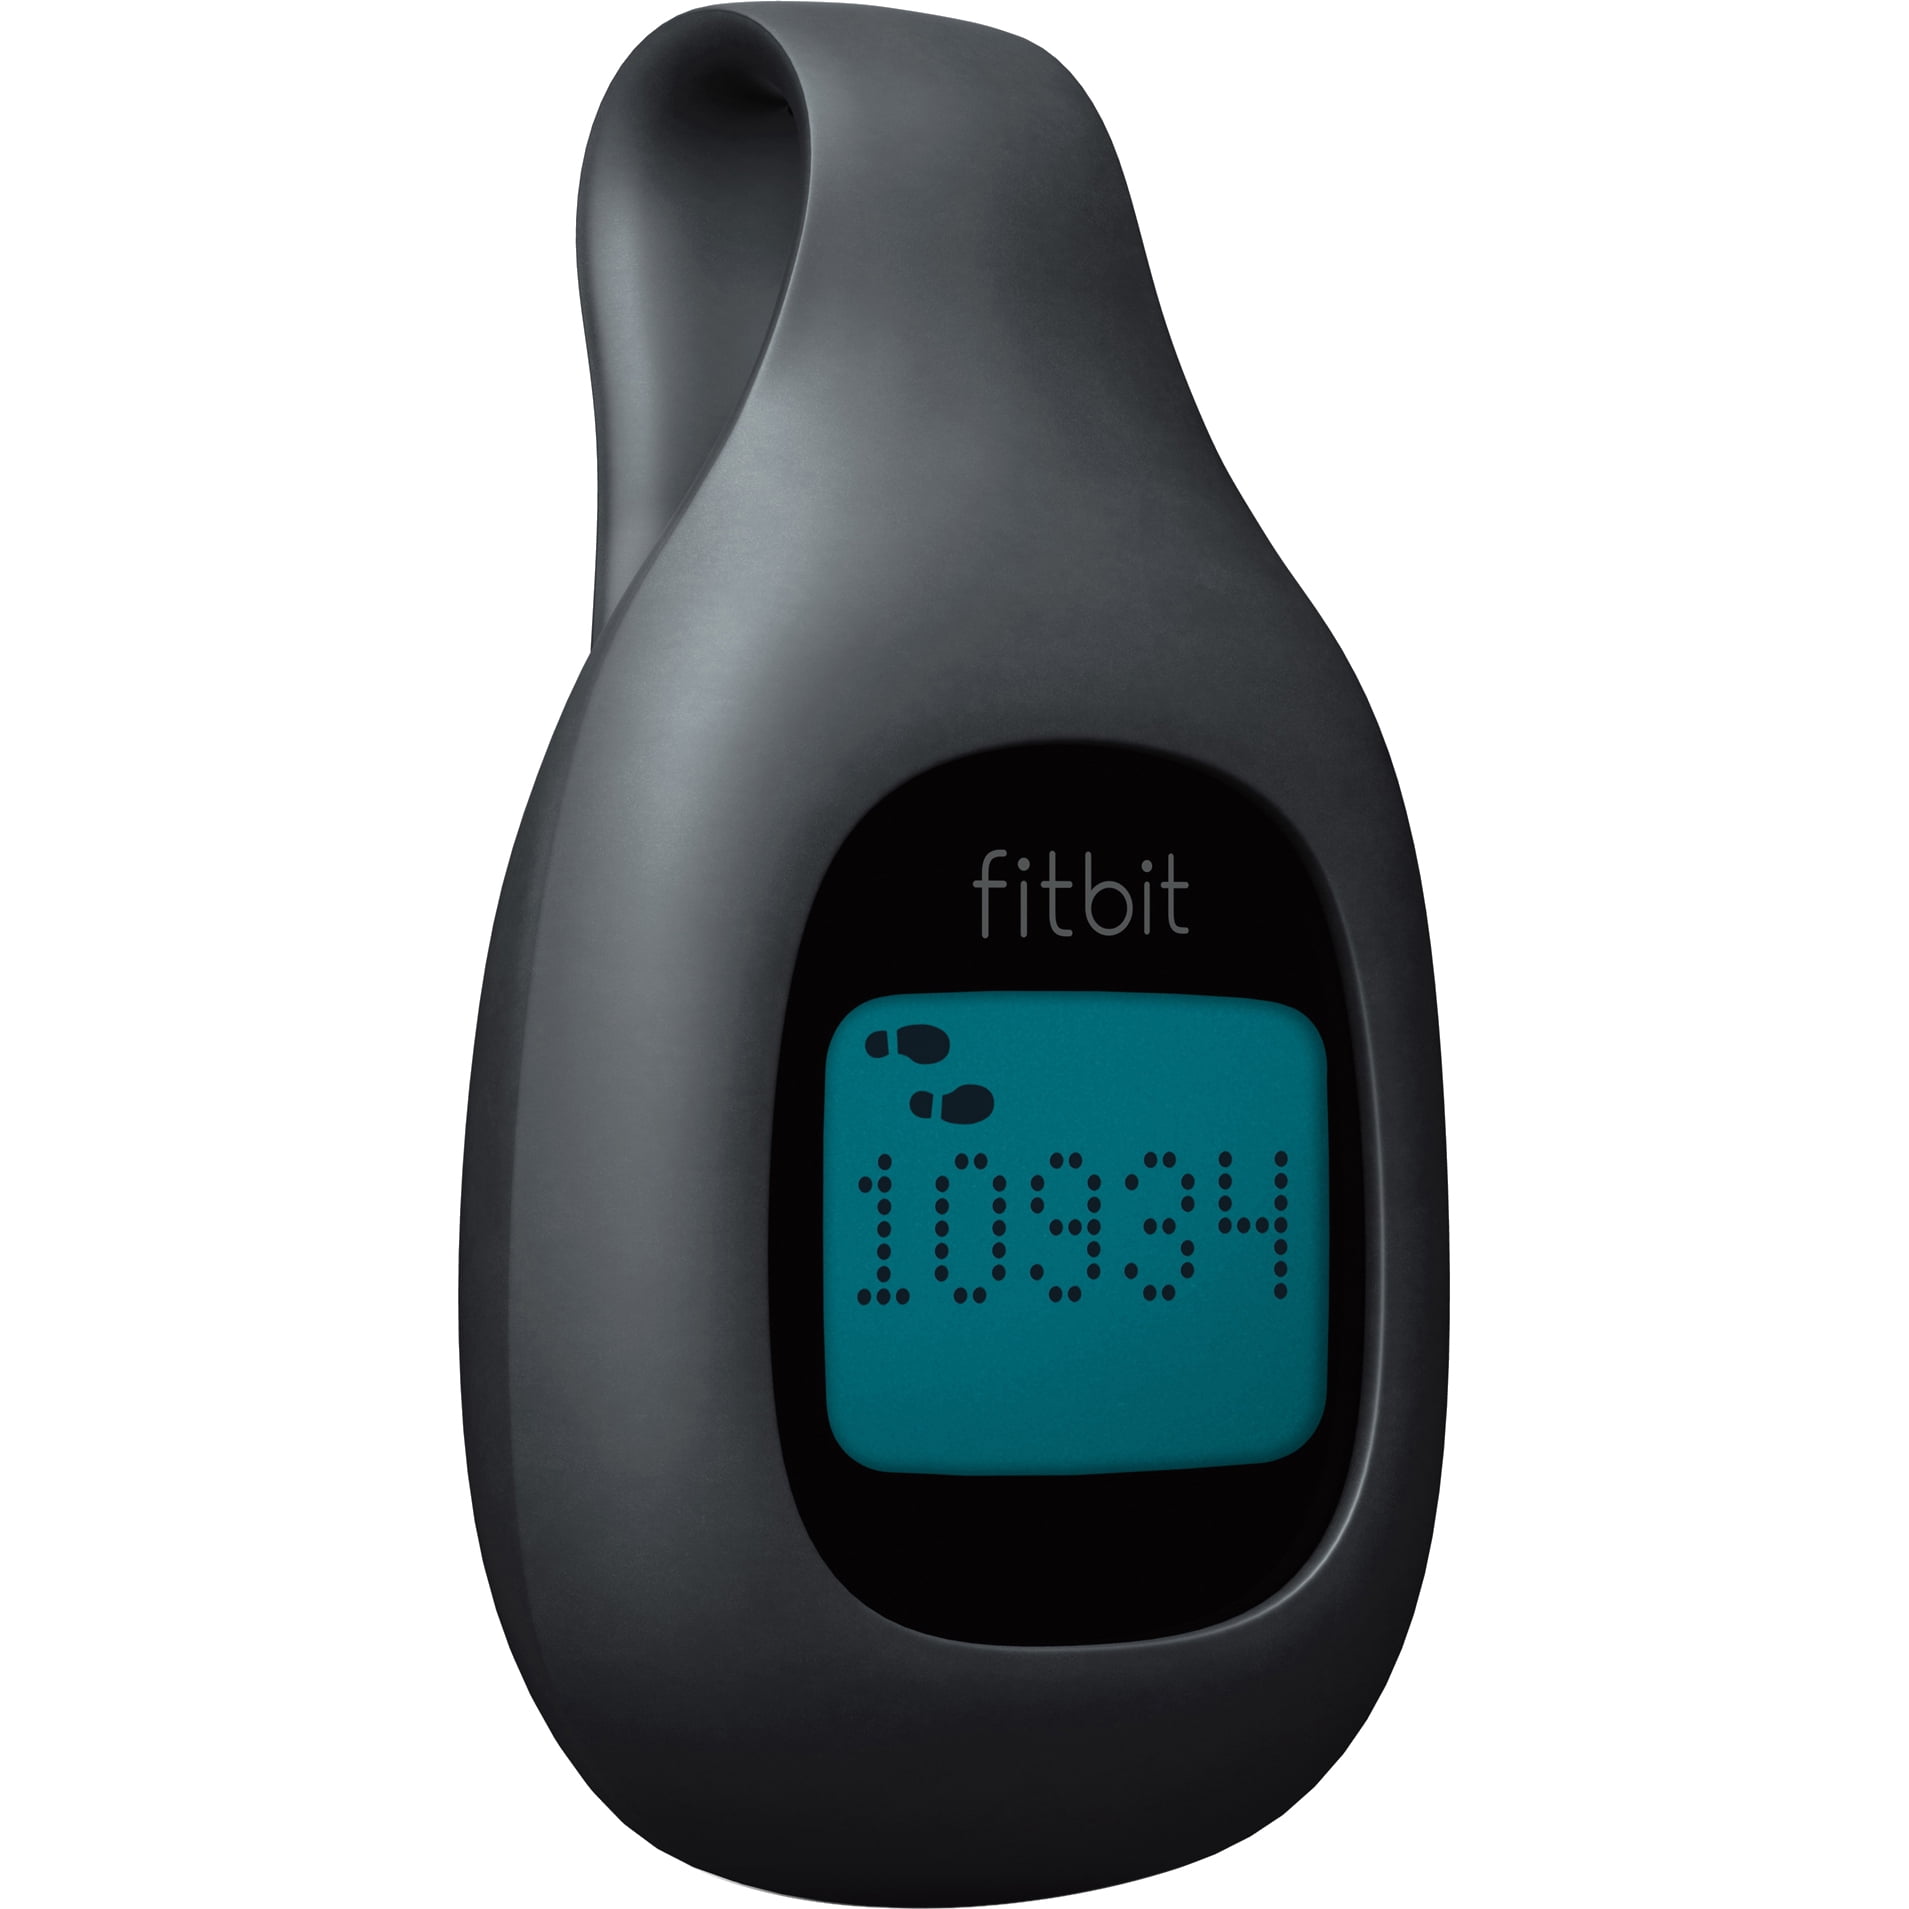 5 pcs Fitbit Zip Wireless Activity Tracker pedometer Black Charcoal 301C 